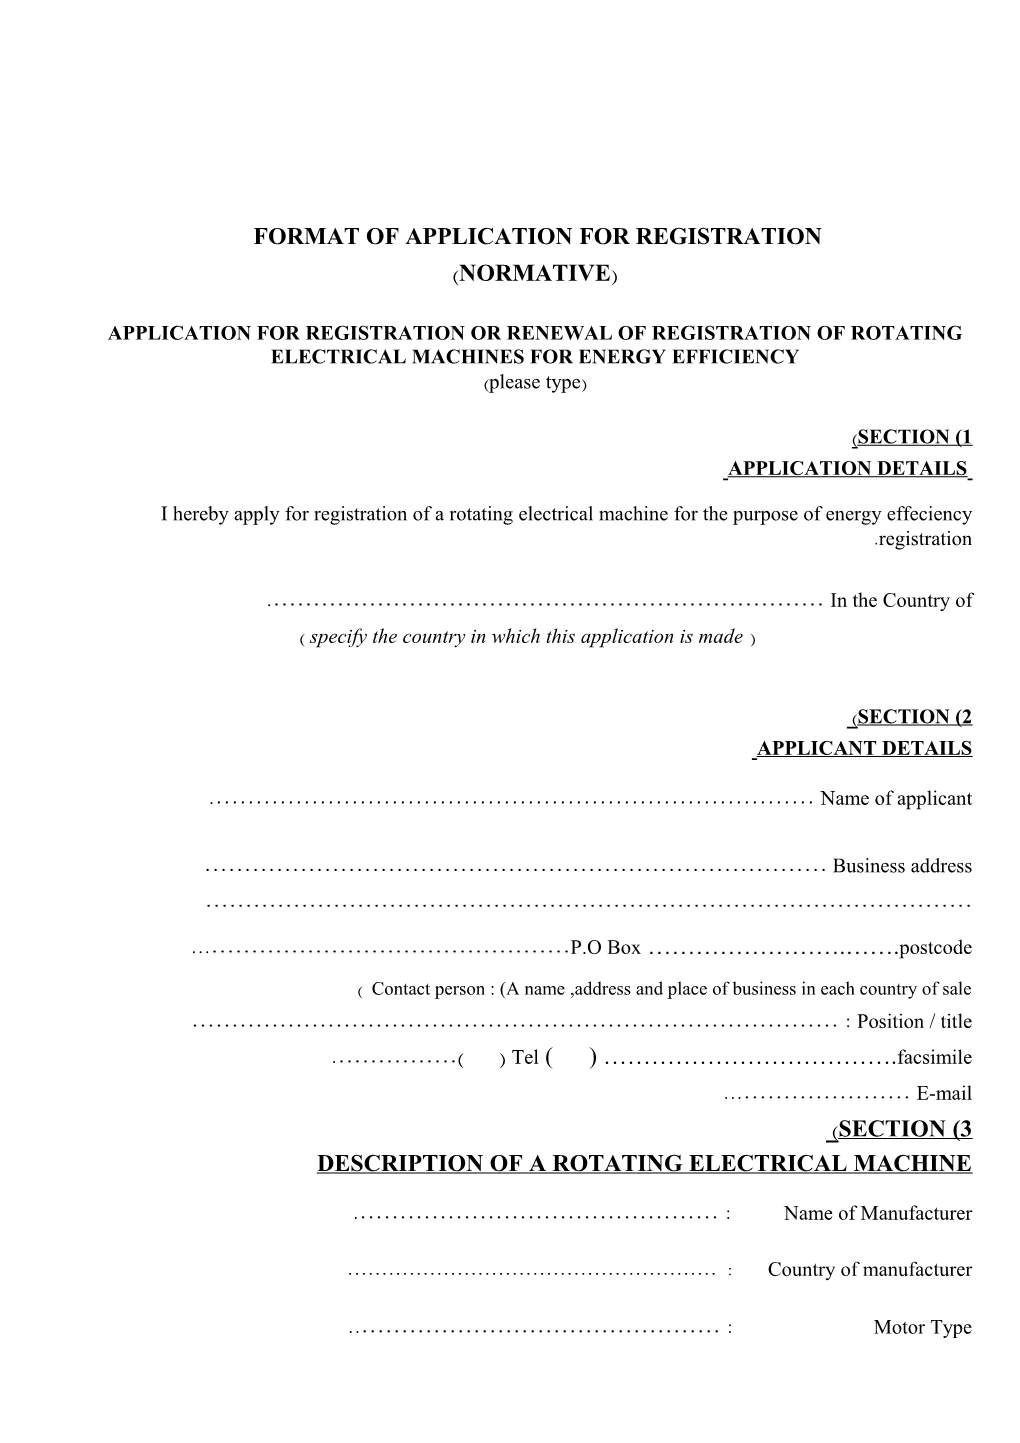 Format of Application for Registration